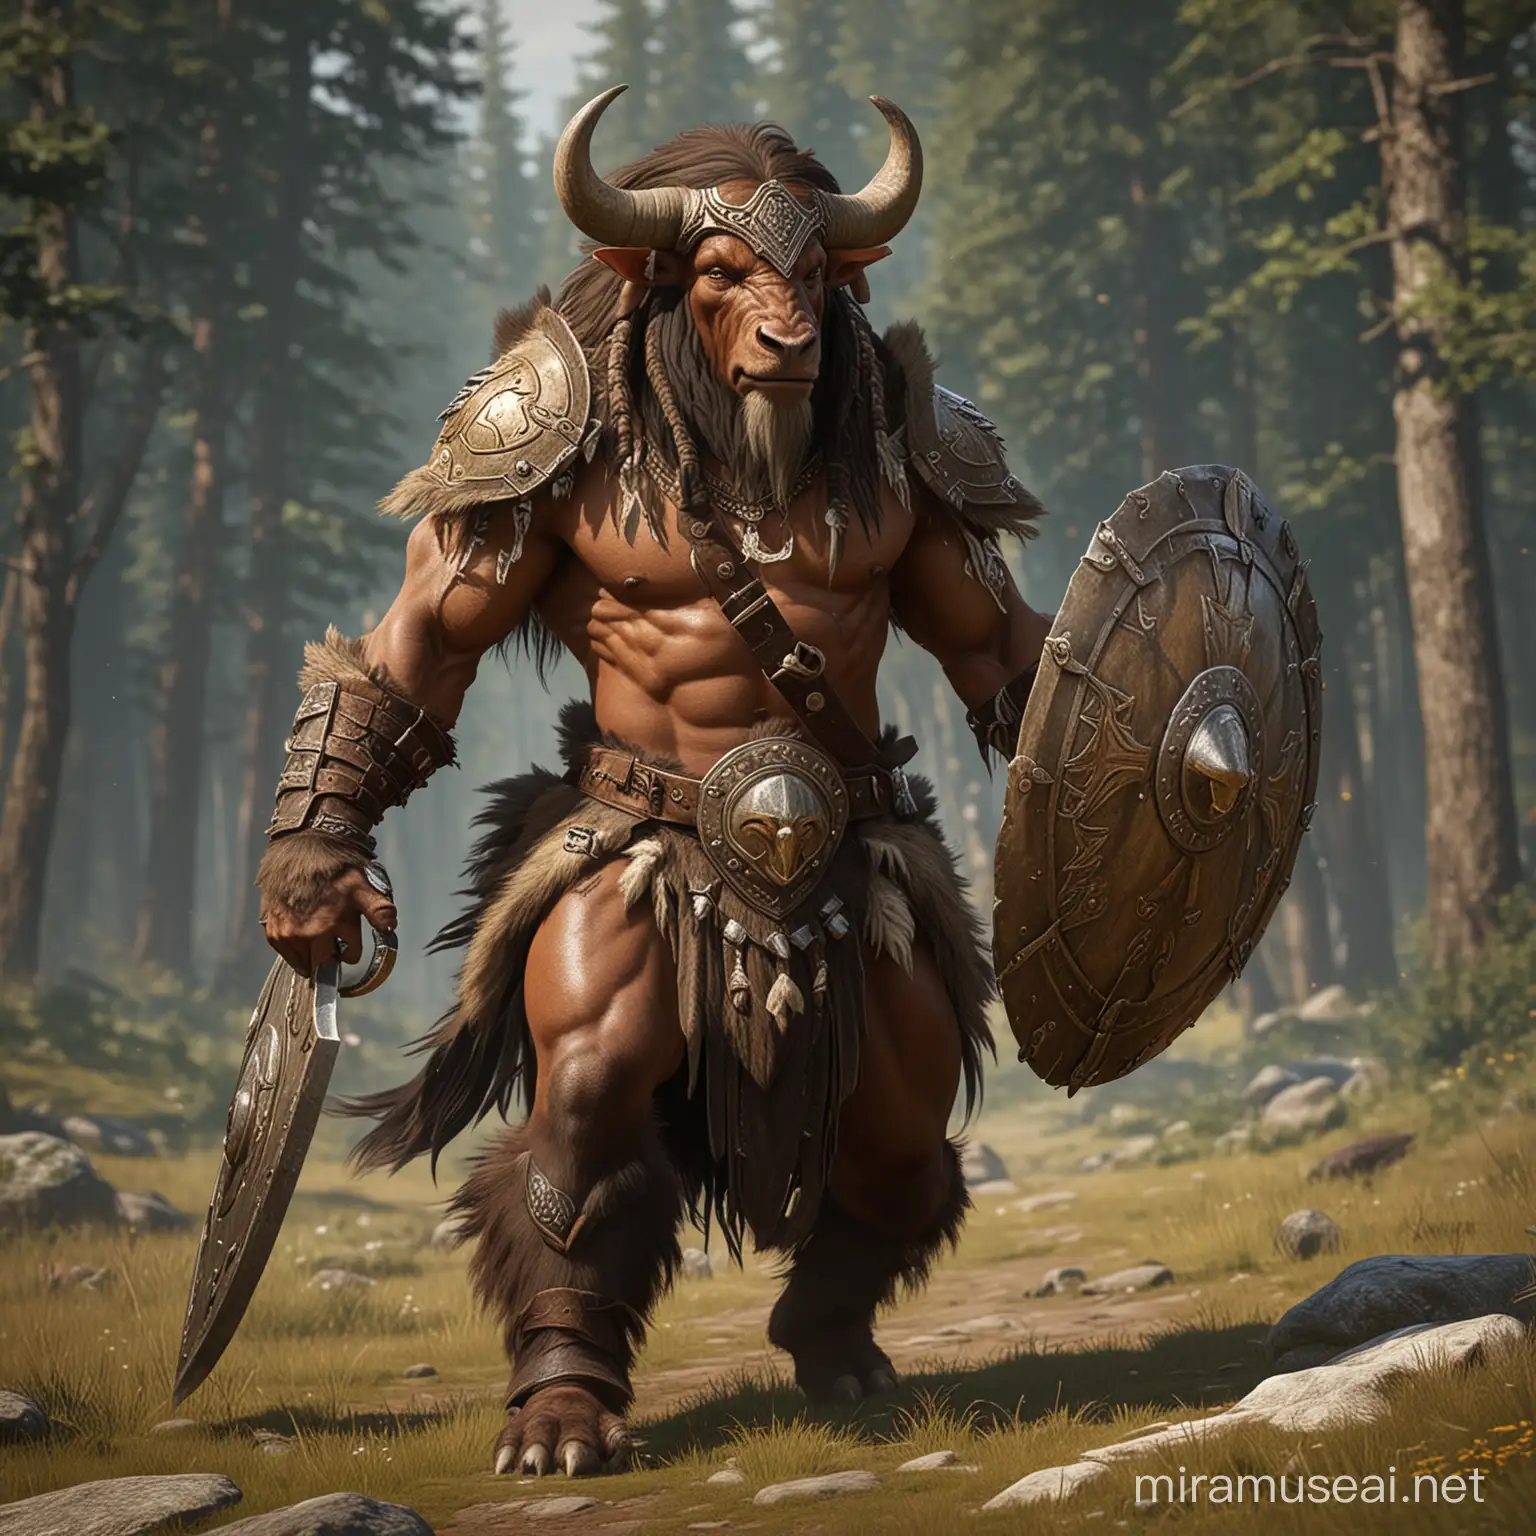 Mighty Tauren Warrior Holding Shield named Hoschi